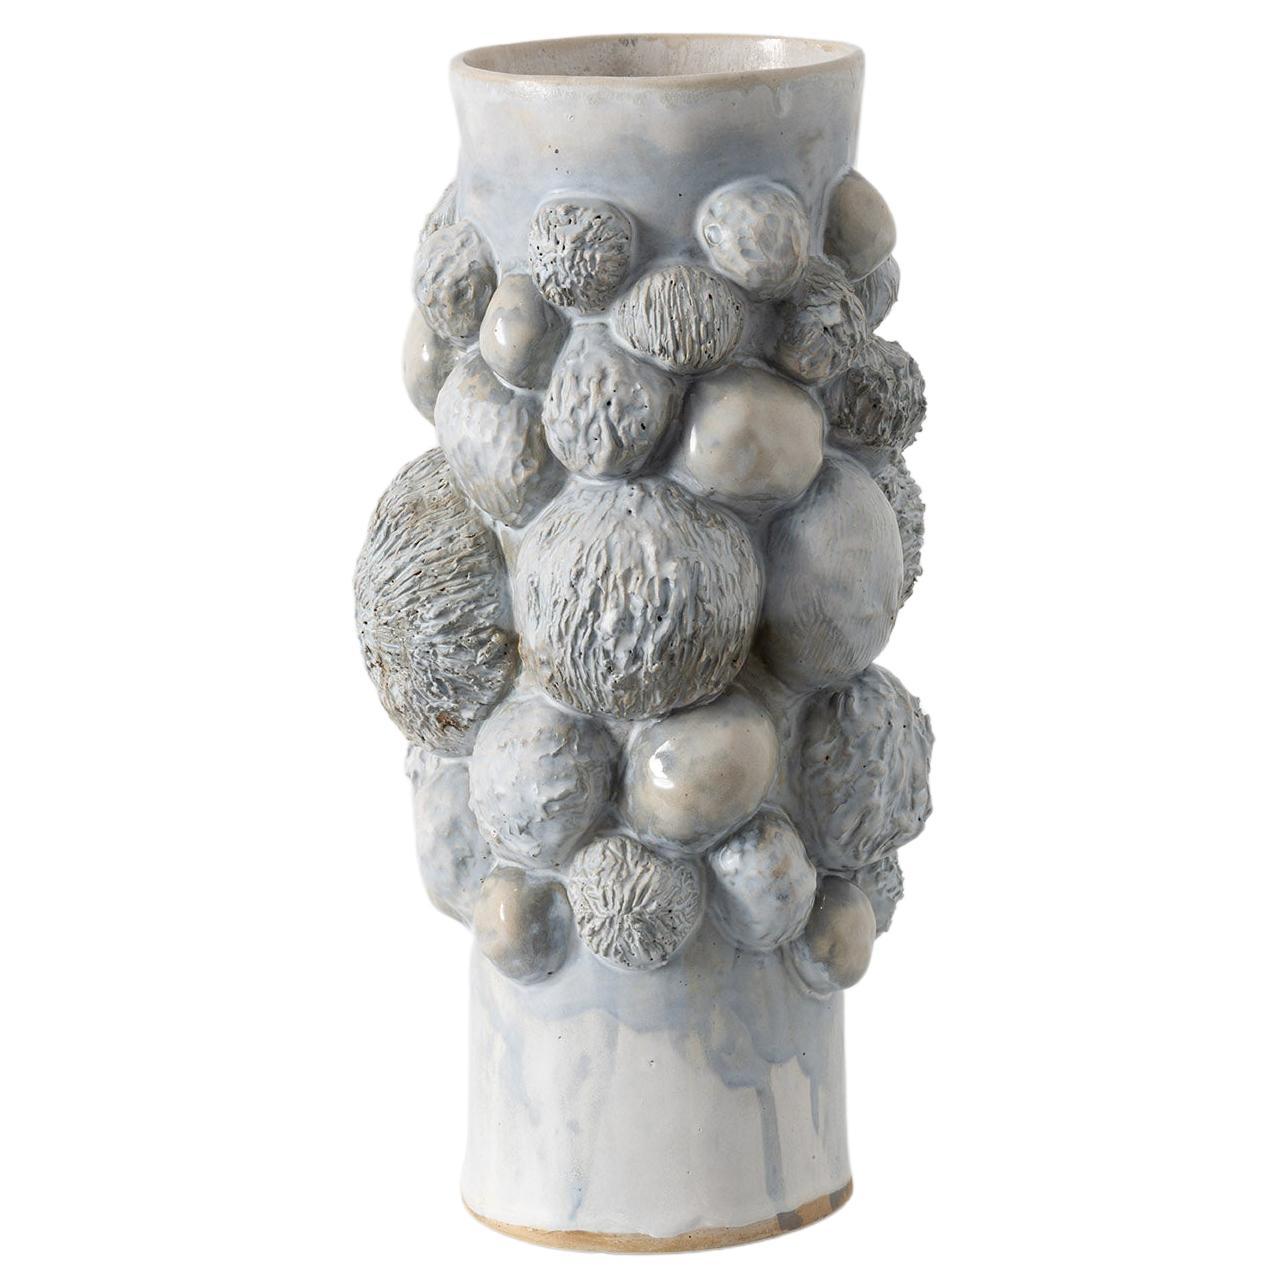 Botanica Vessel in Glazed Ceramic by Trish DeMasi